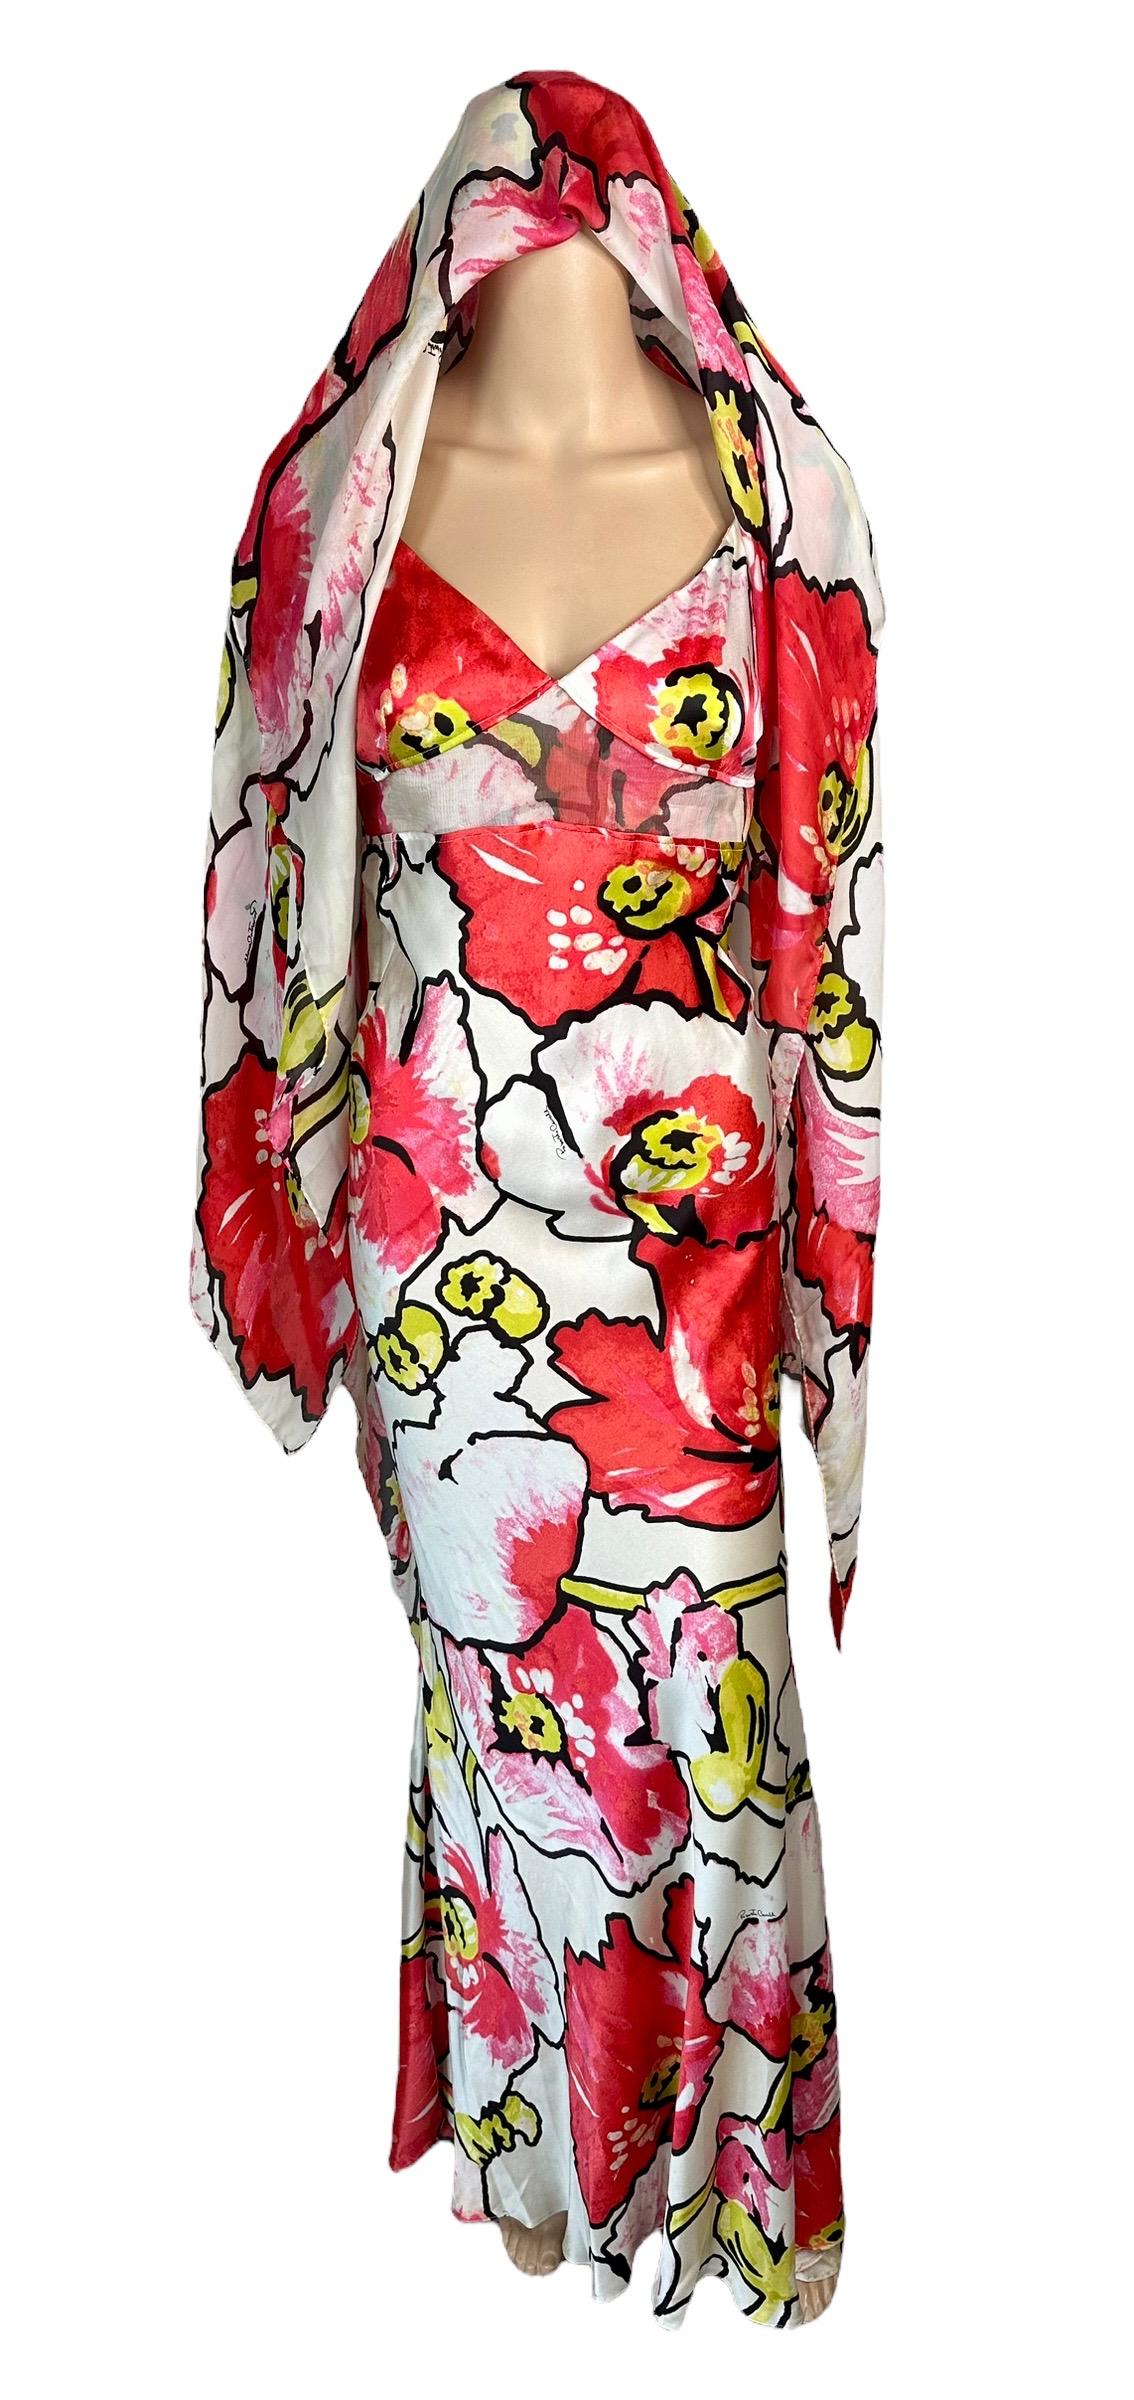 Beige Roberto Cavalli S/S 2005 Silk Floral Print Slip Evening Dress & Wrap 2 Piece Set For Sale